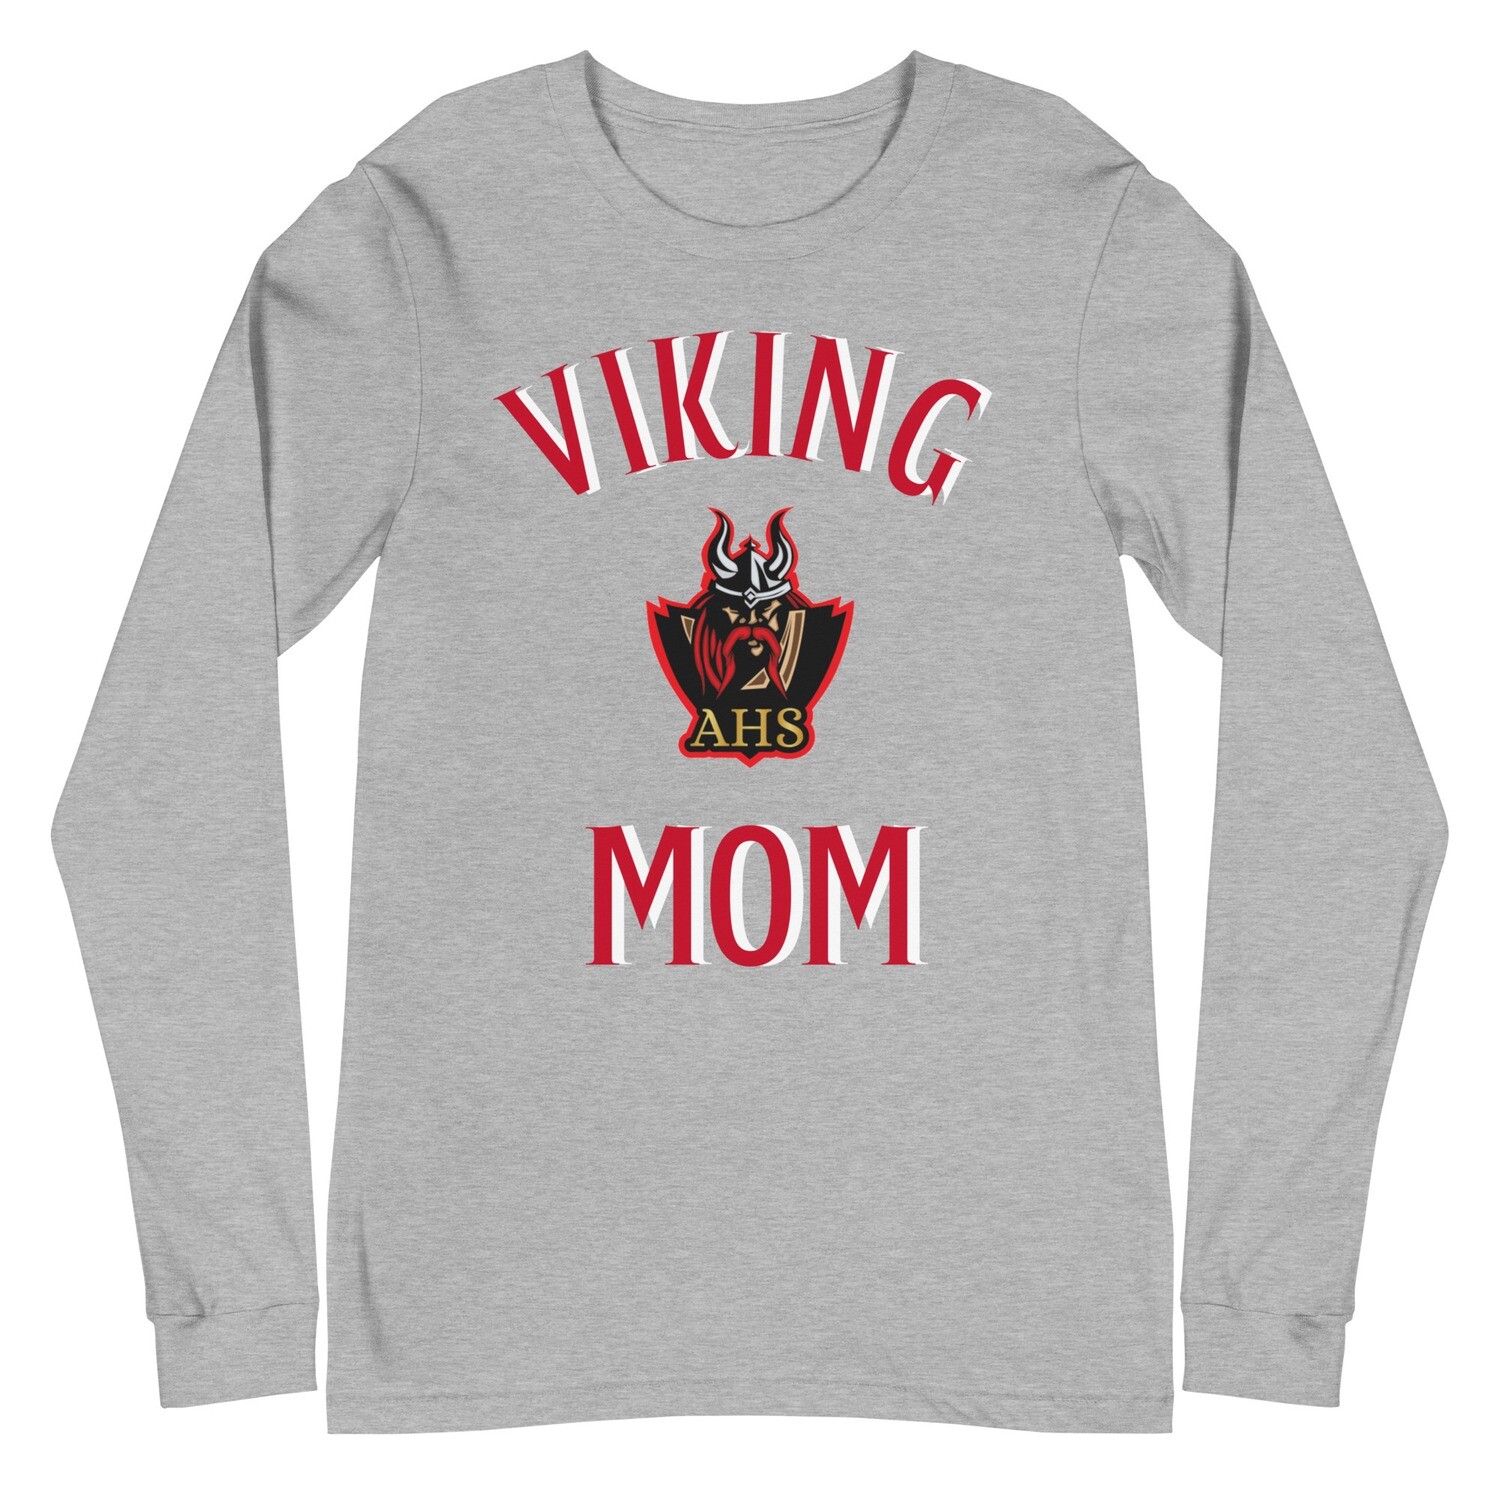 Women's Viking Mom Long Sleeve Tee - Black/Grey